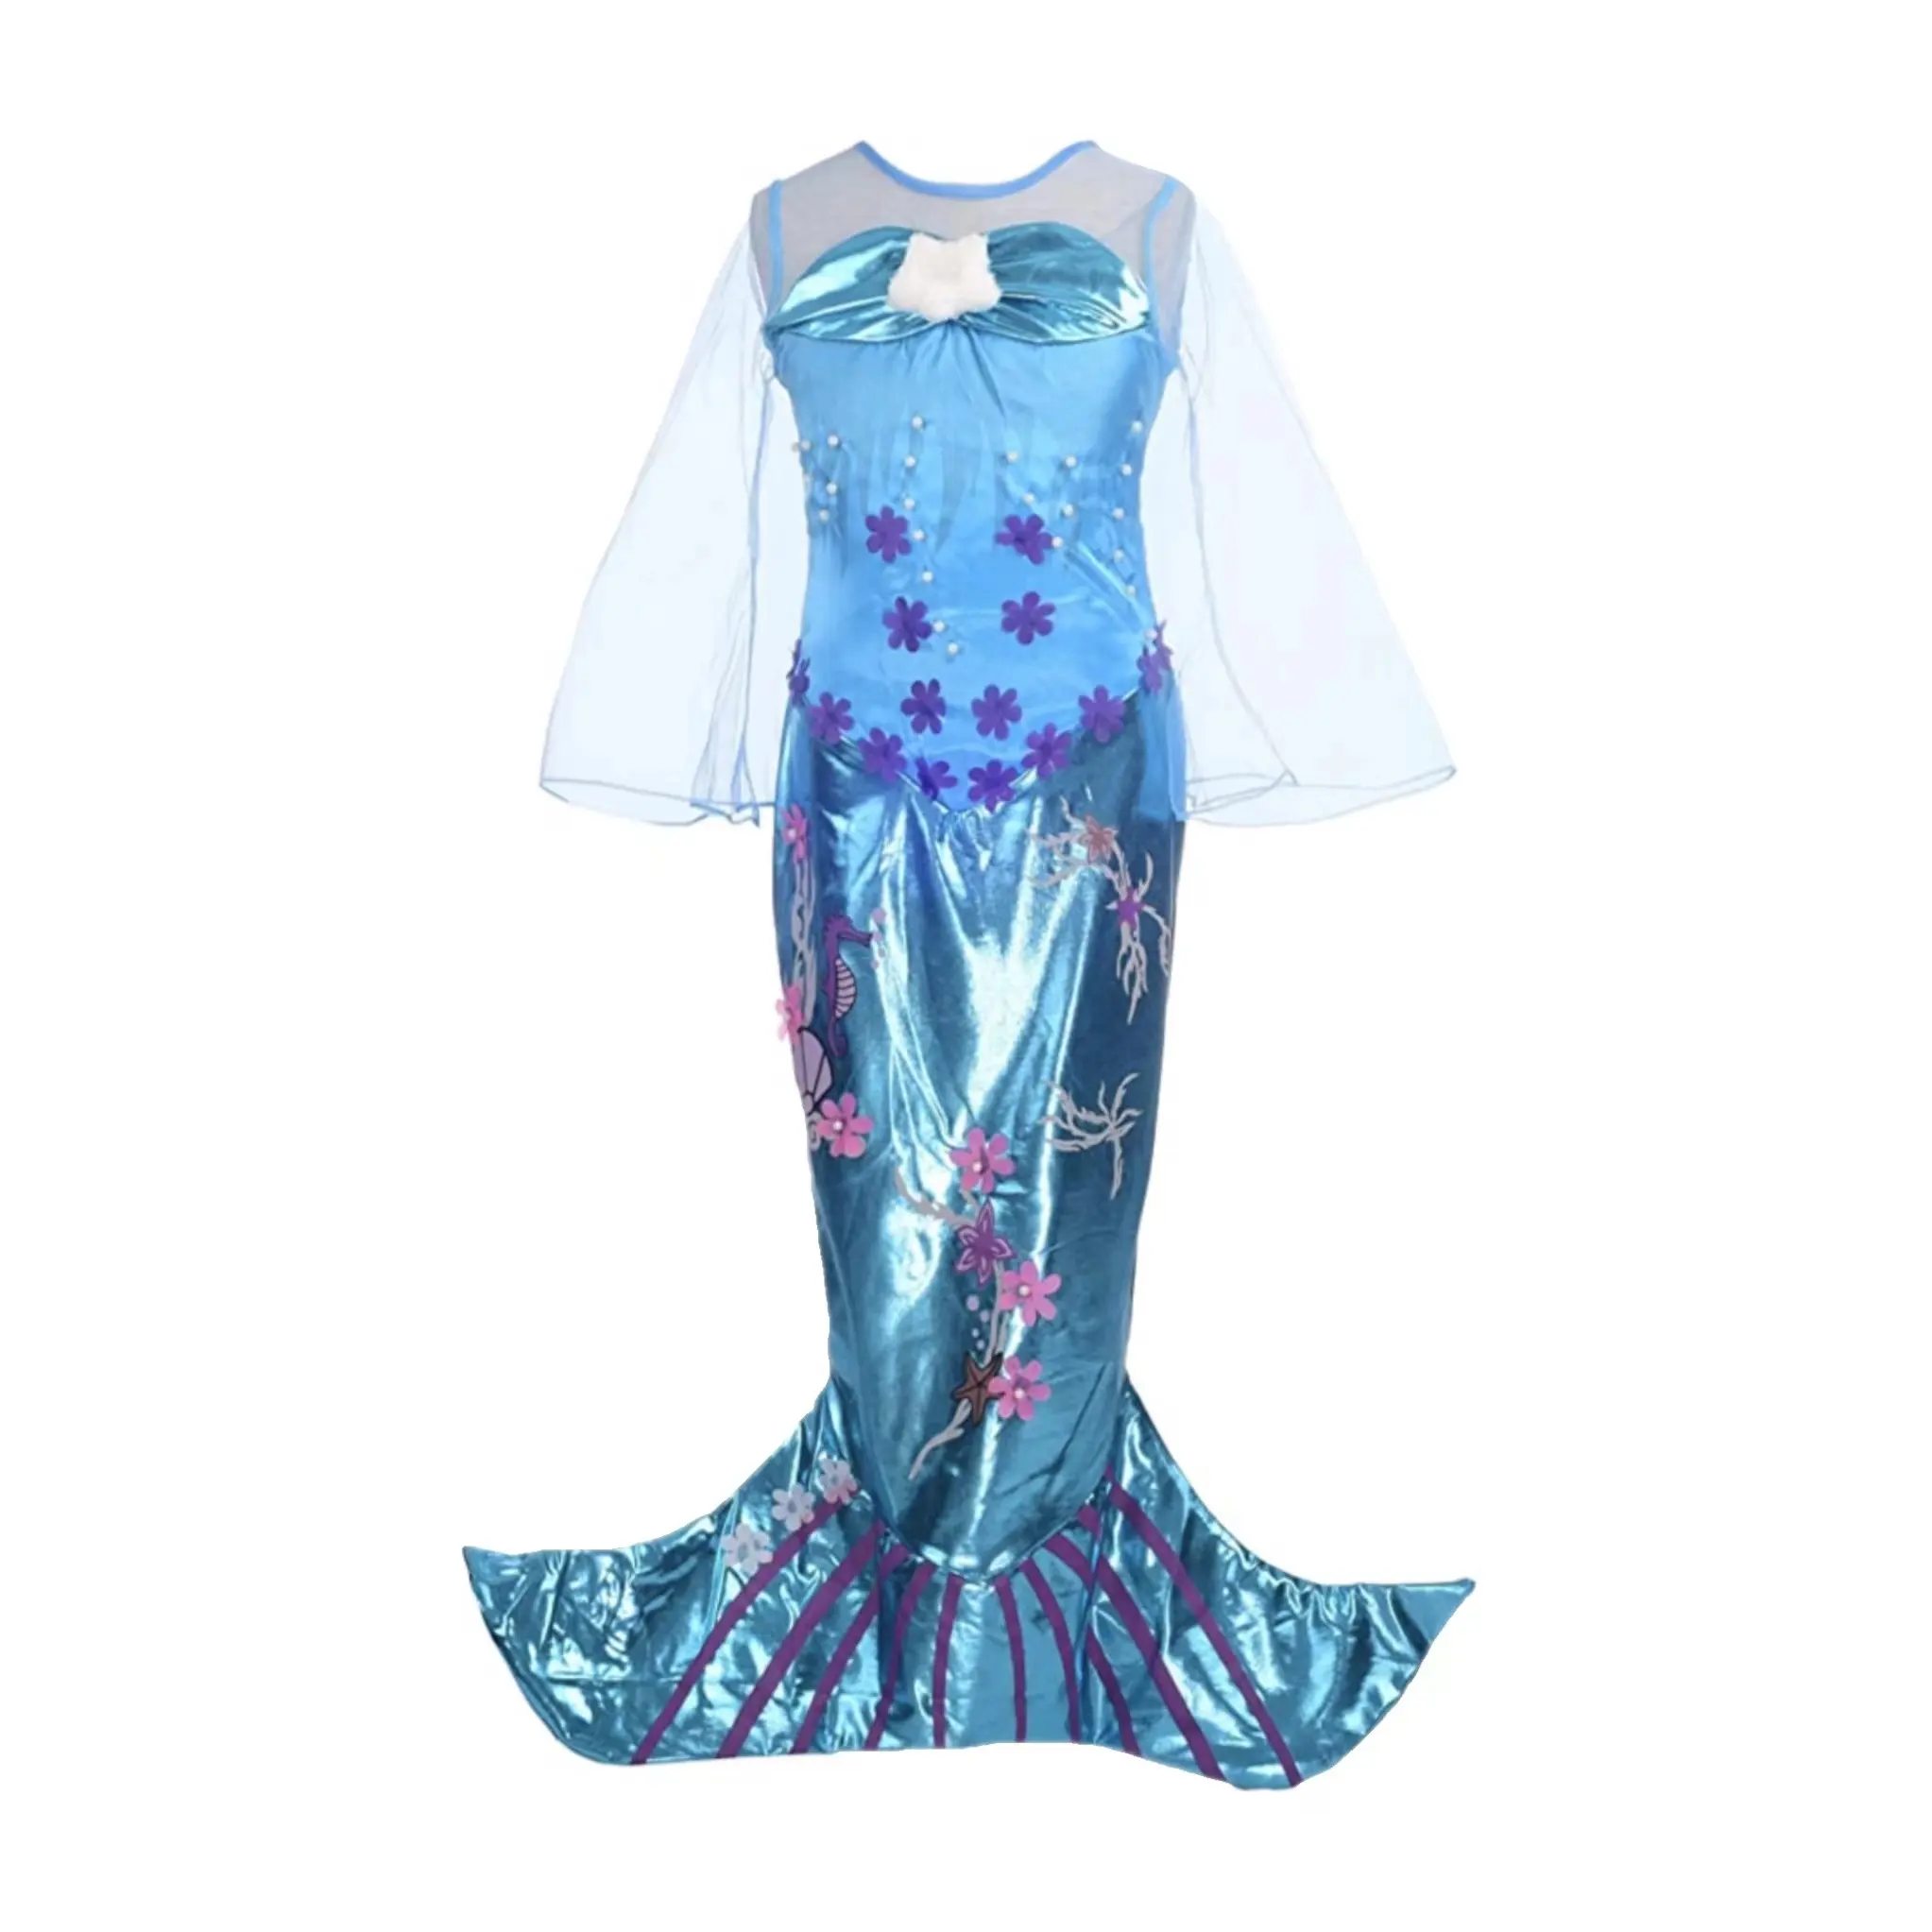 Mermaid Summer Girl Dress Halloween Party Princess Ariel Cosplay Costume Hot Sale Trailing Dress Beach Photo Clothes